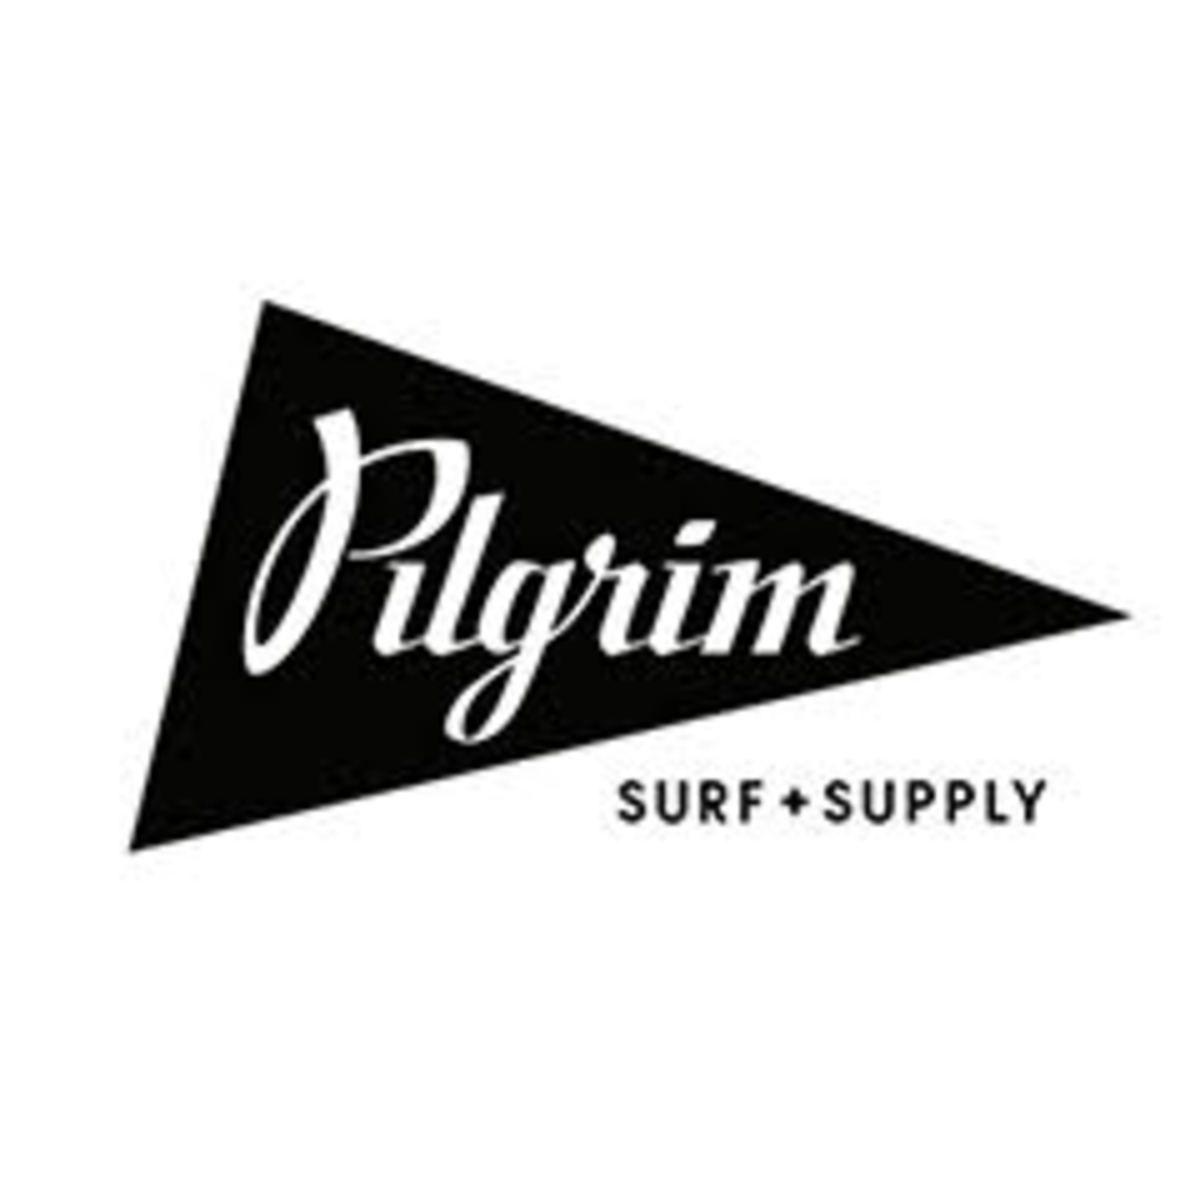 Pilgrim Logo - Pilgrim Surf + Supply Is Hiring An Apparel Designer In New York